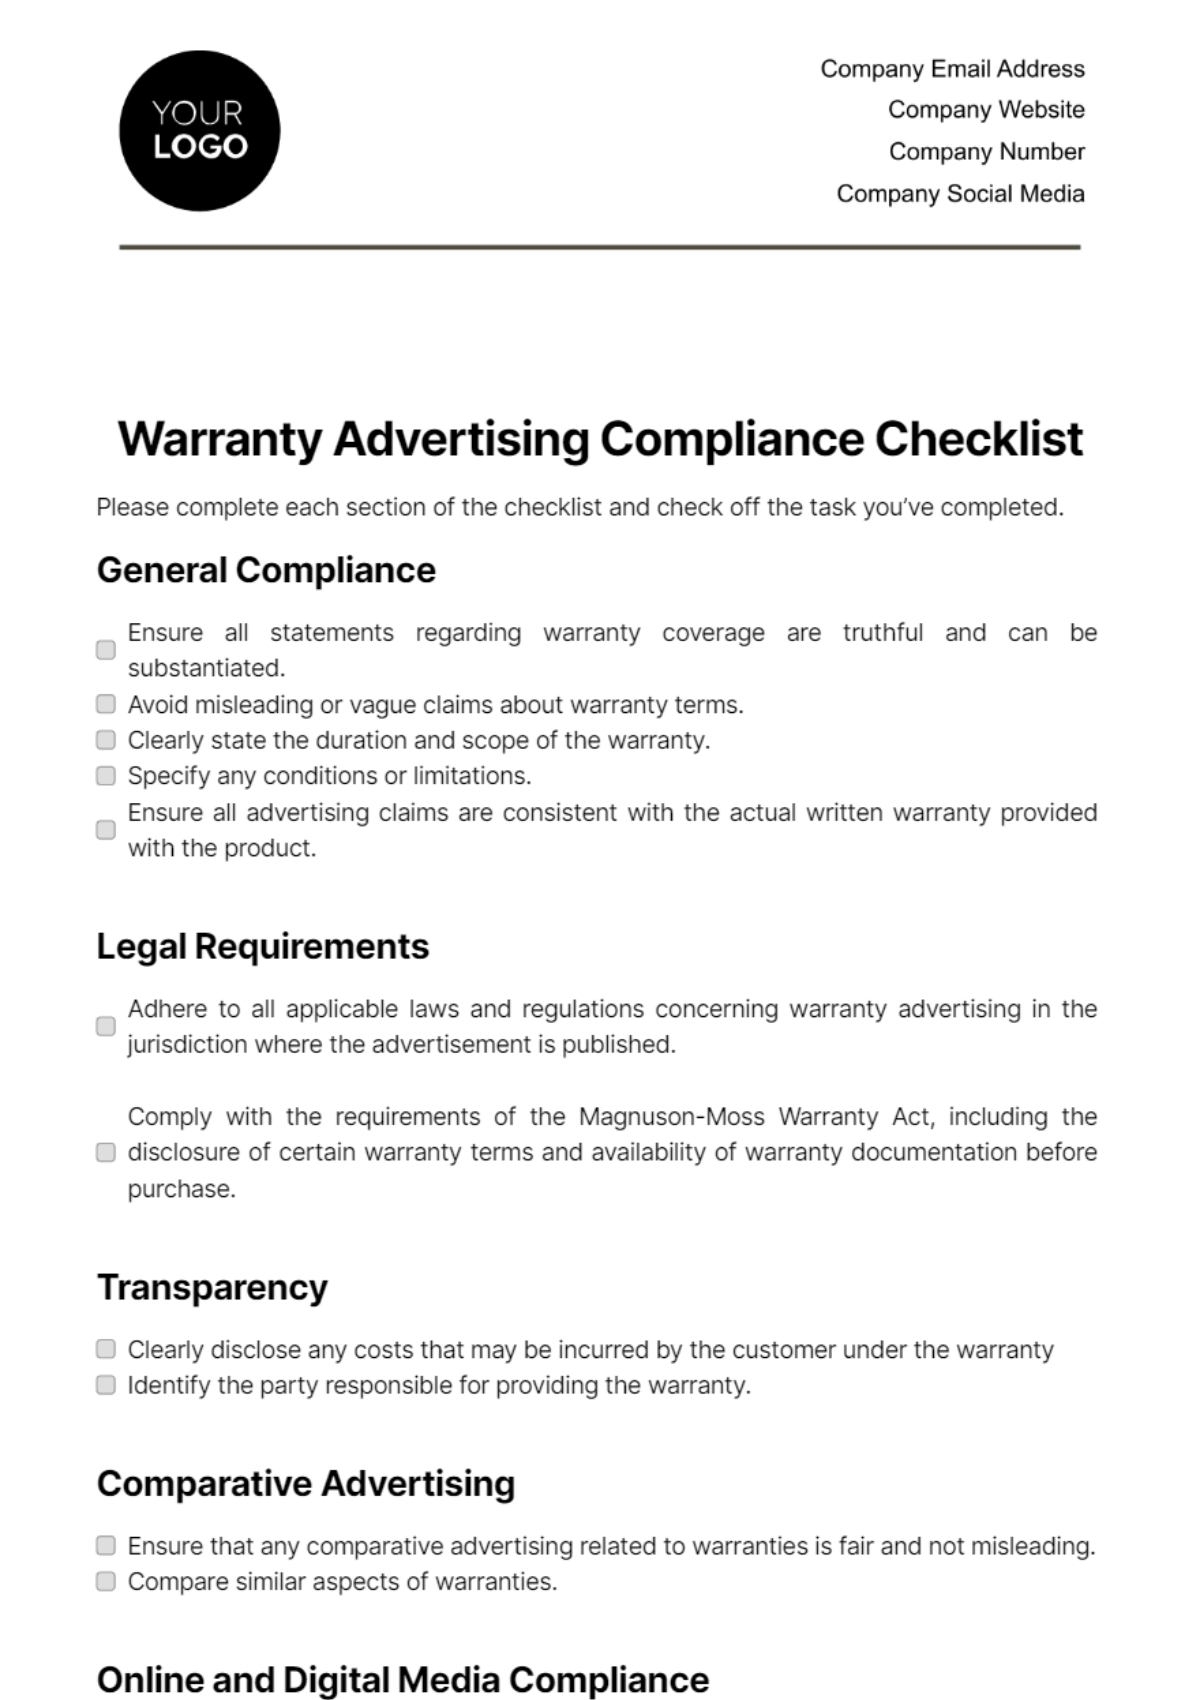 Free Warranty Advertising Compliance Checklist Template